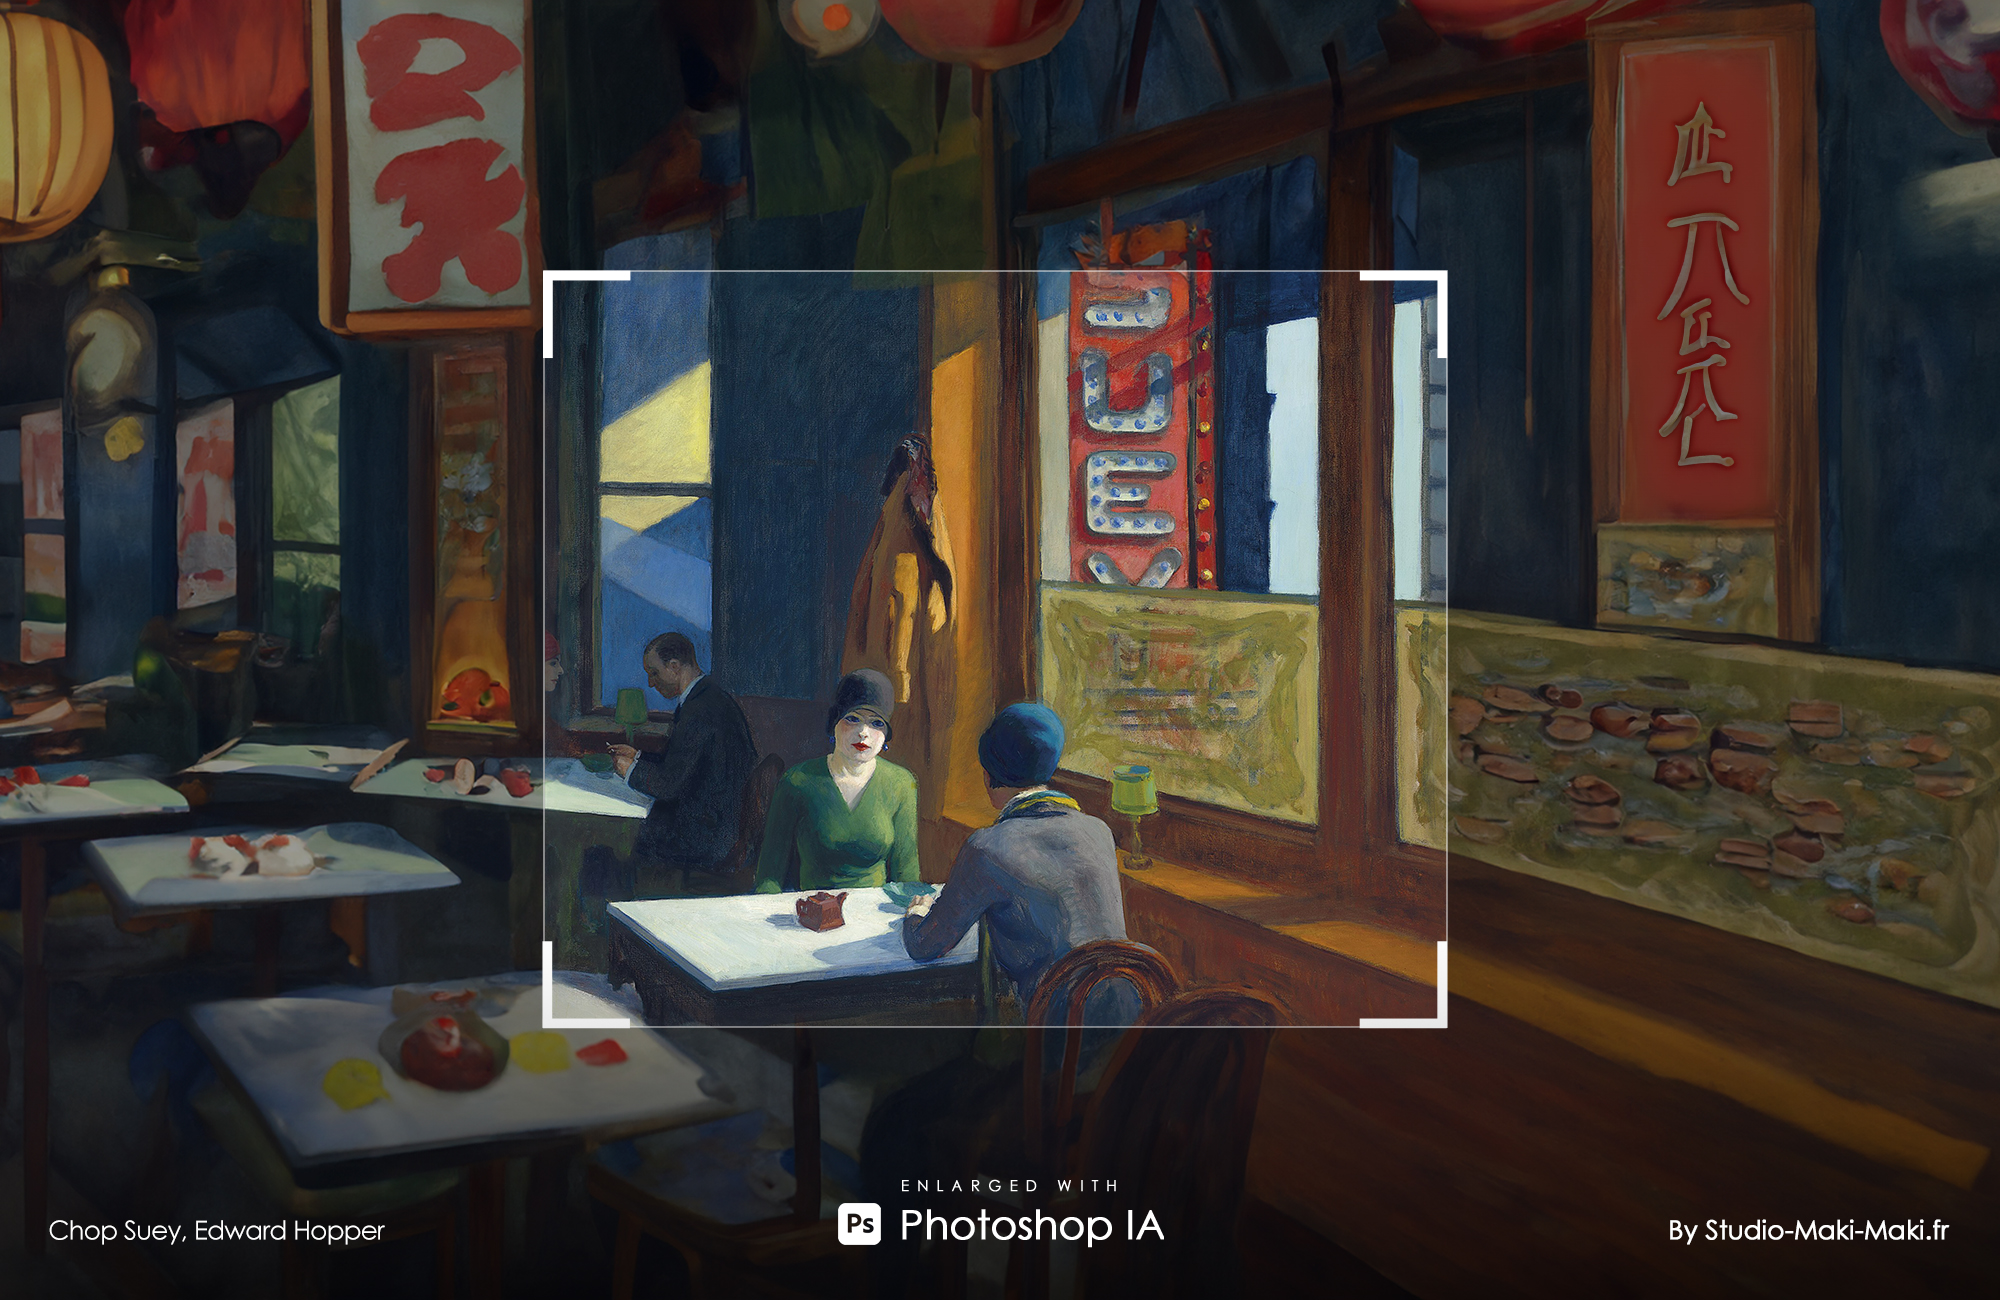 Chop Suey, Edward Hopper - Enlarged with Photoshop IA - By Studio Maki Maki